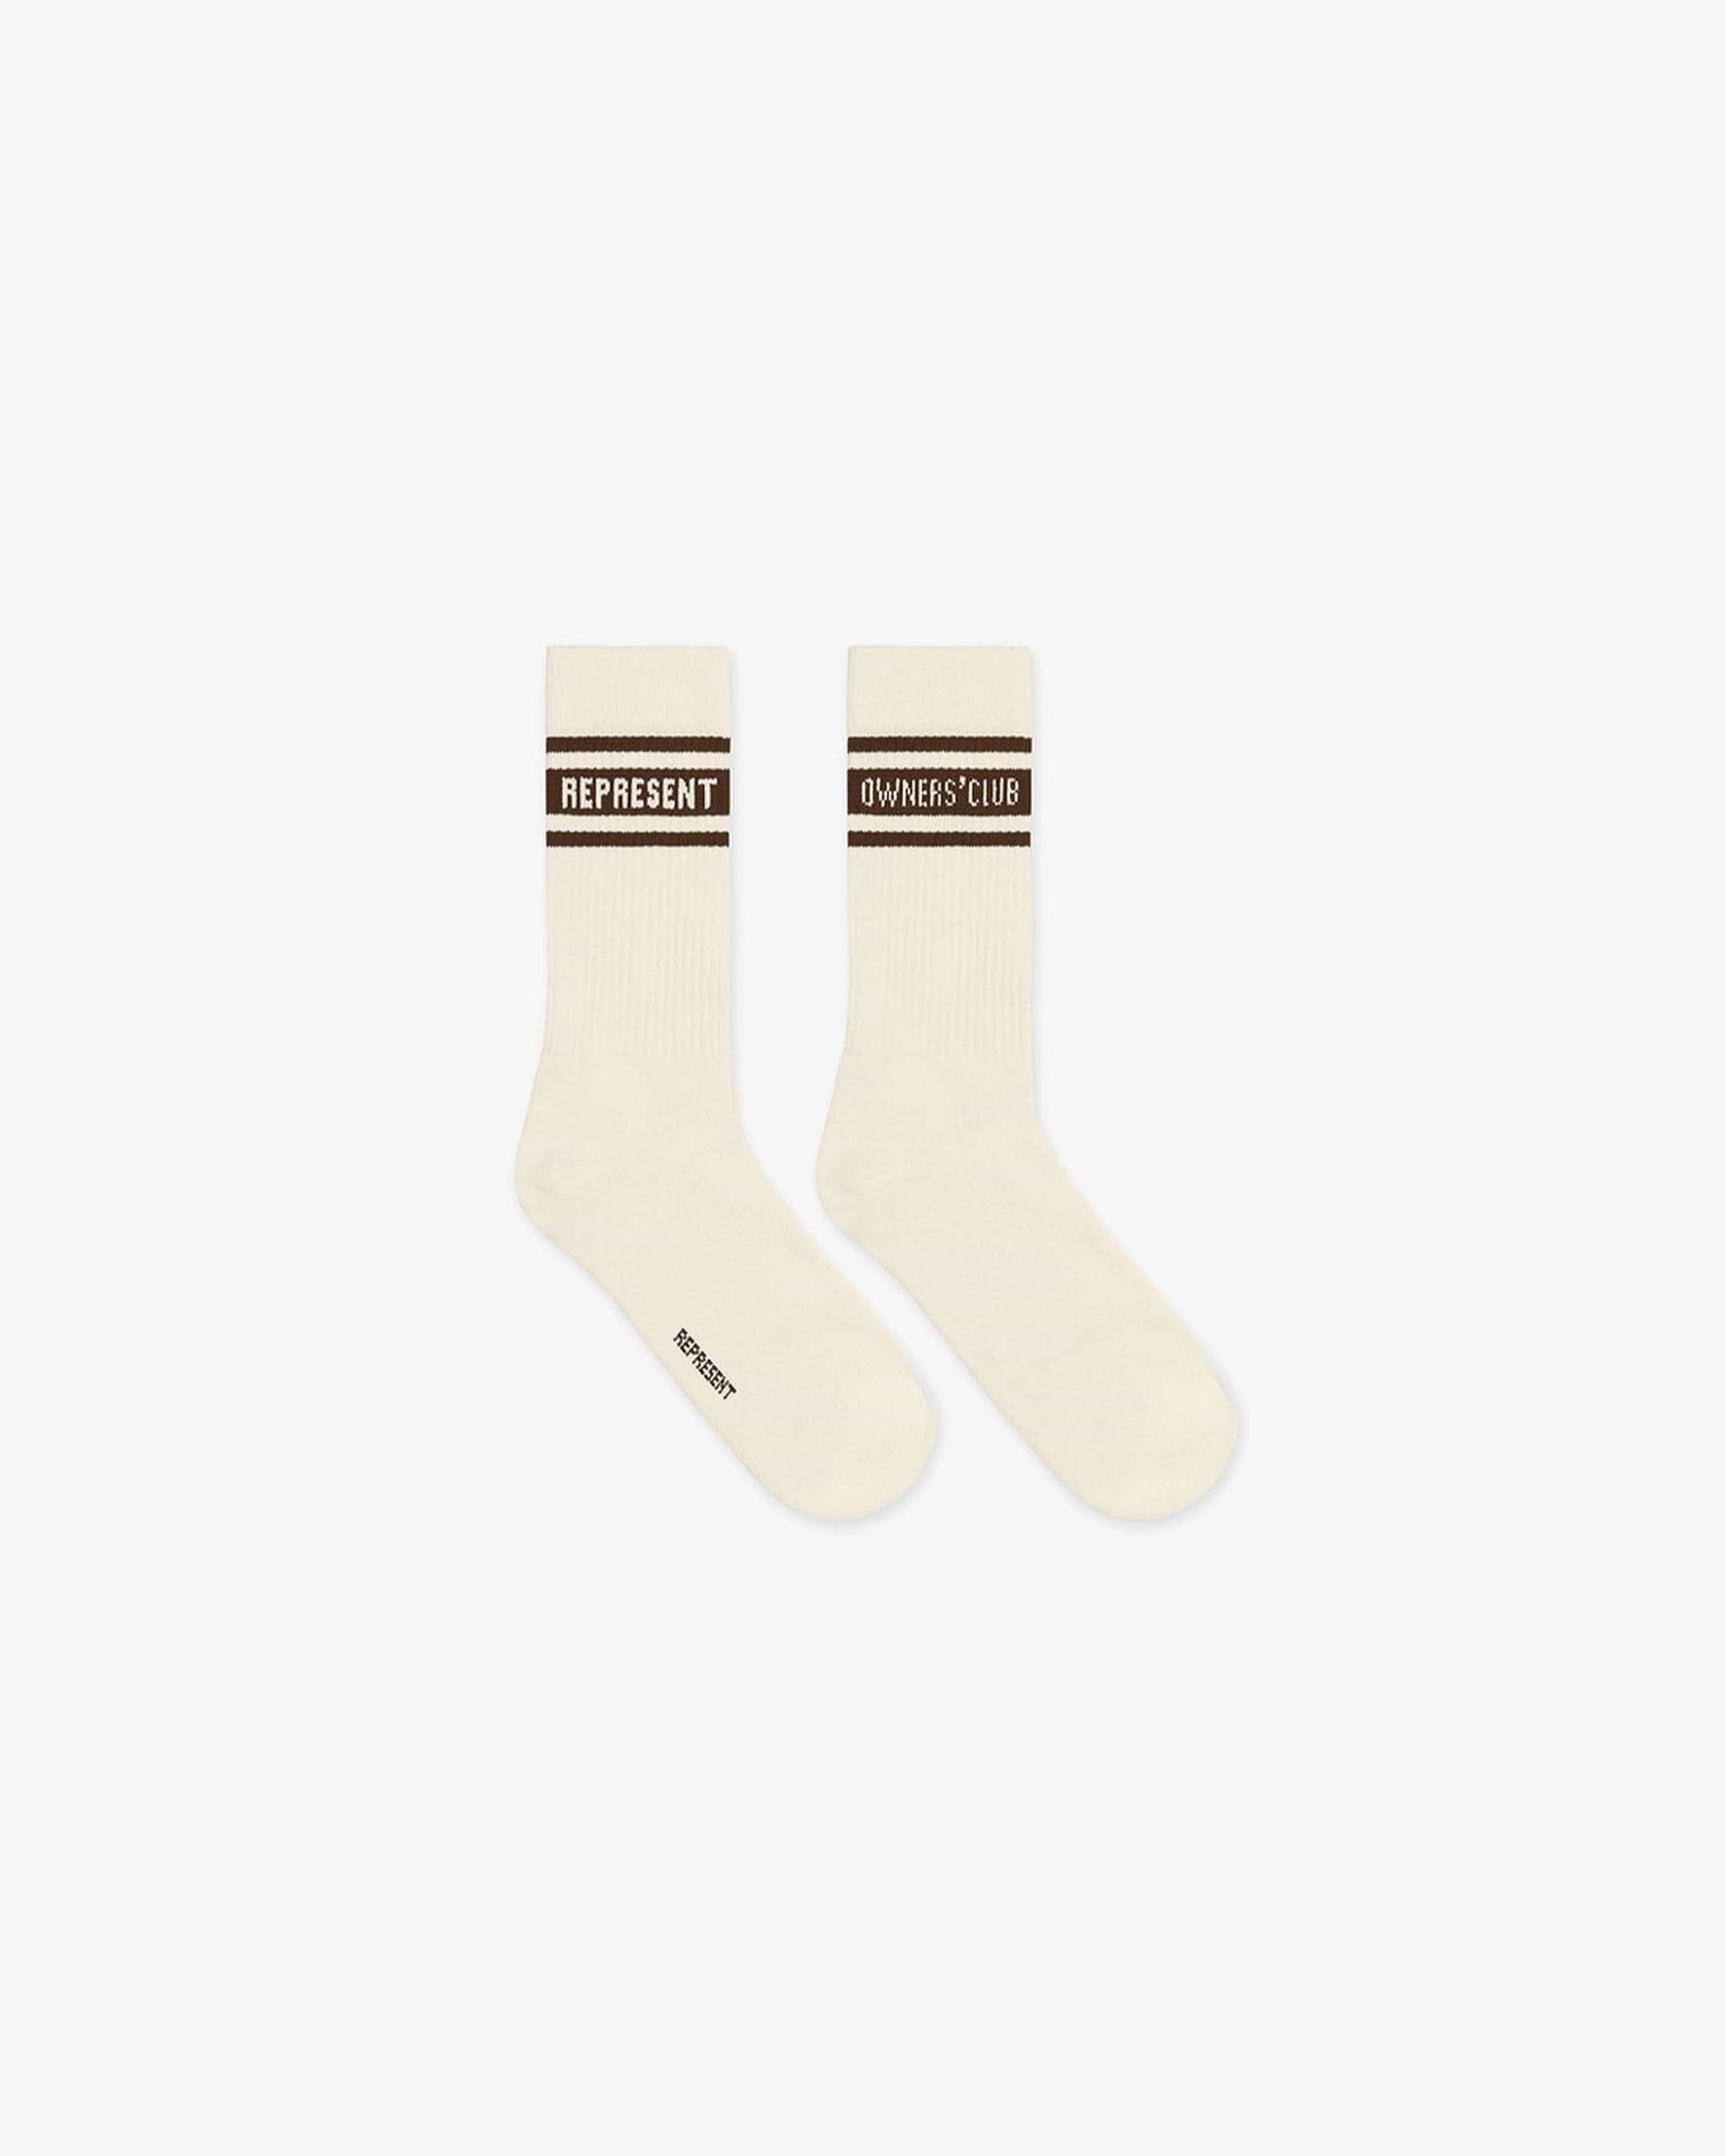 Represent Owners Club Socks | Vintage White/Vintage Brown Accessories Owners Club | Represent Clo